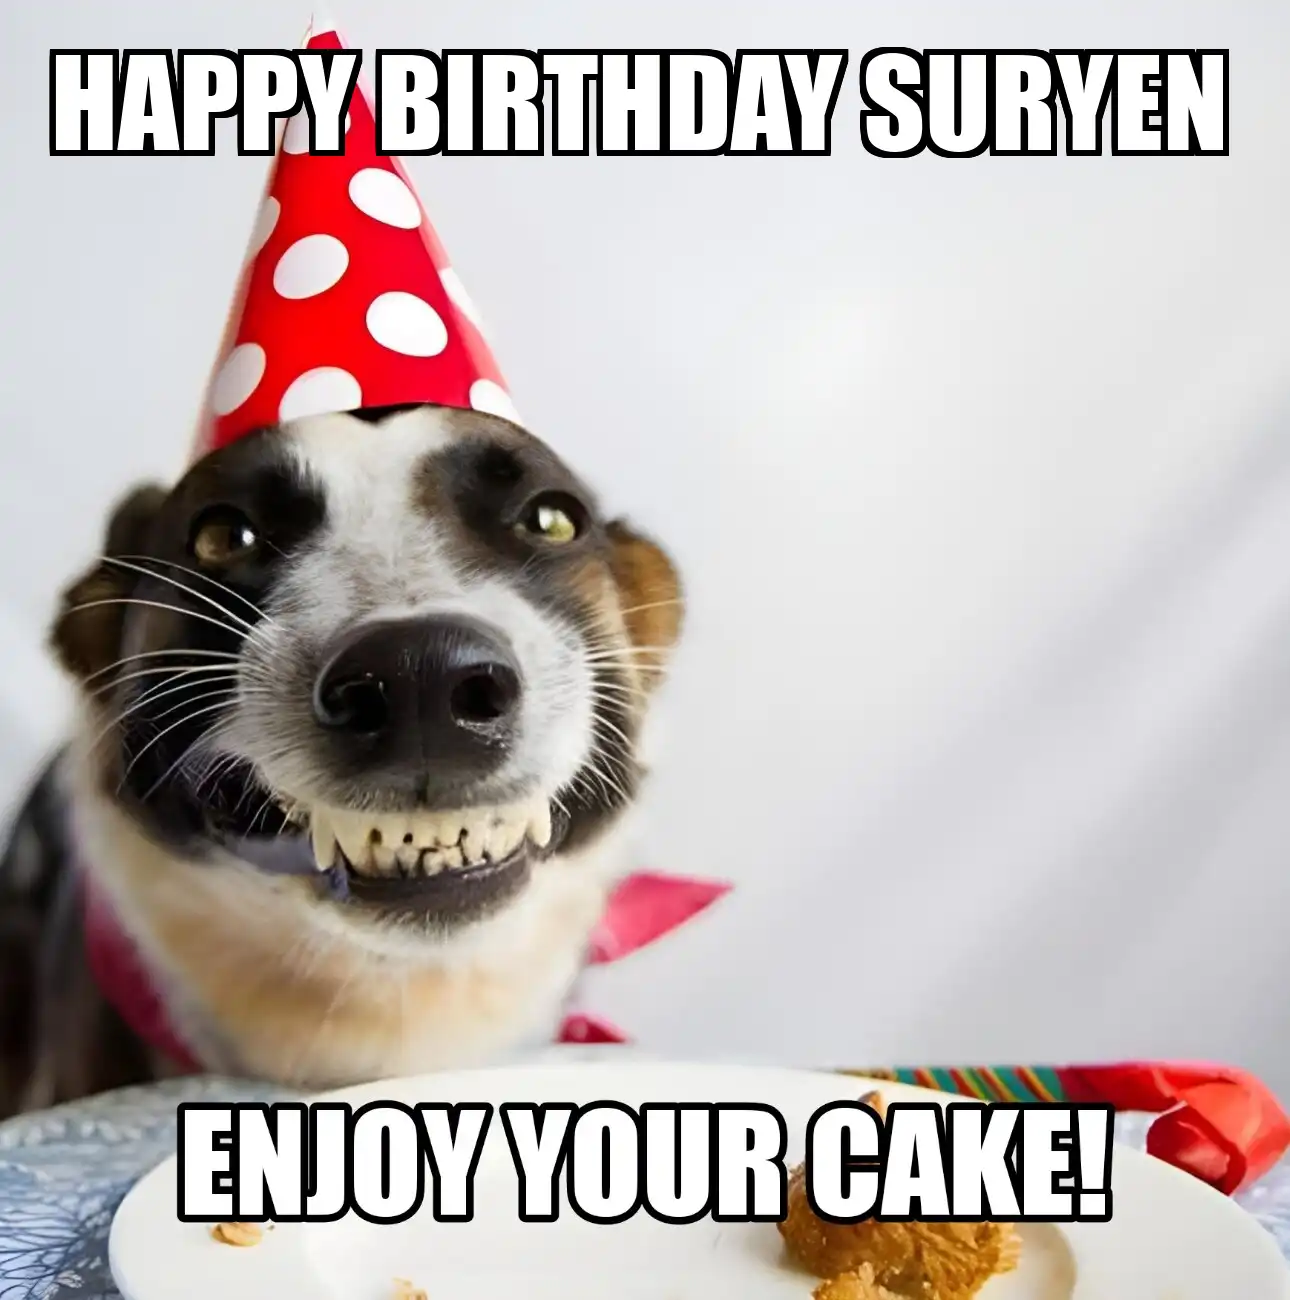 Happy Birthday Suryen Enjoy Your Cake Dog Meme